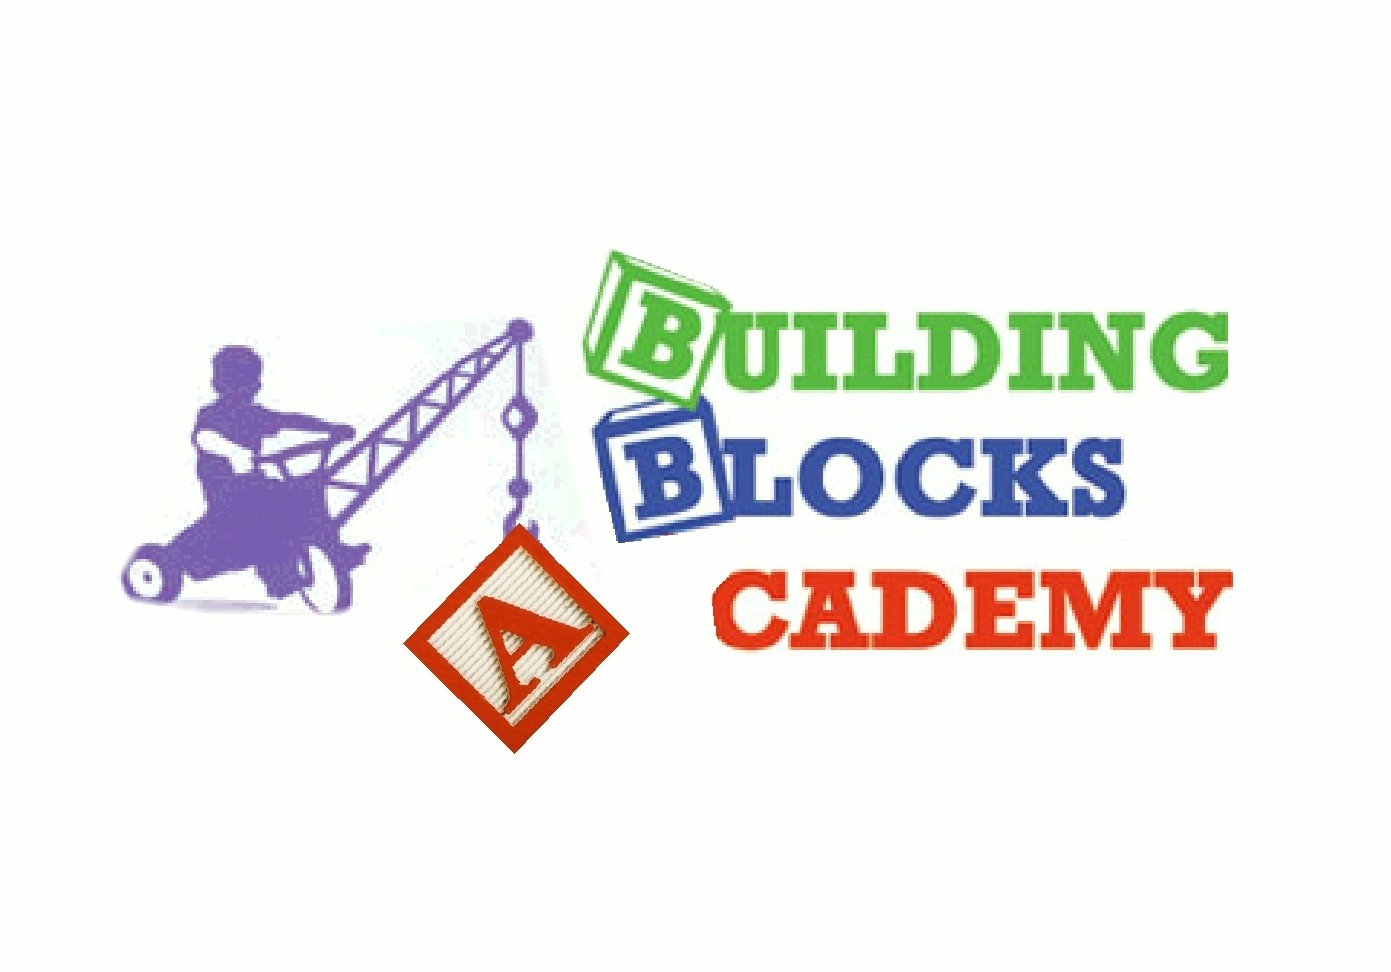 BUILDING BLOCKS ACADEMY